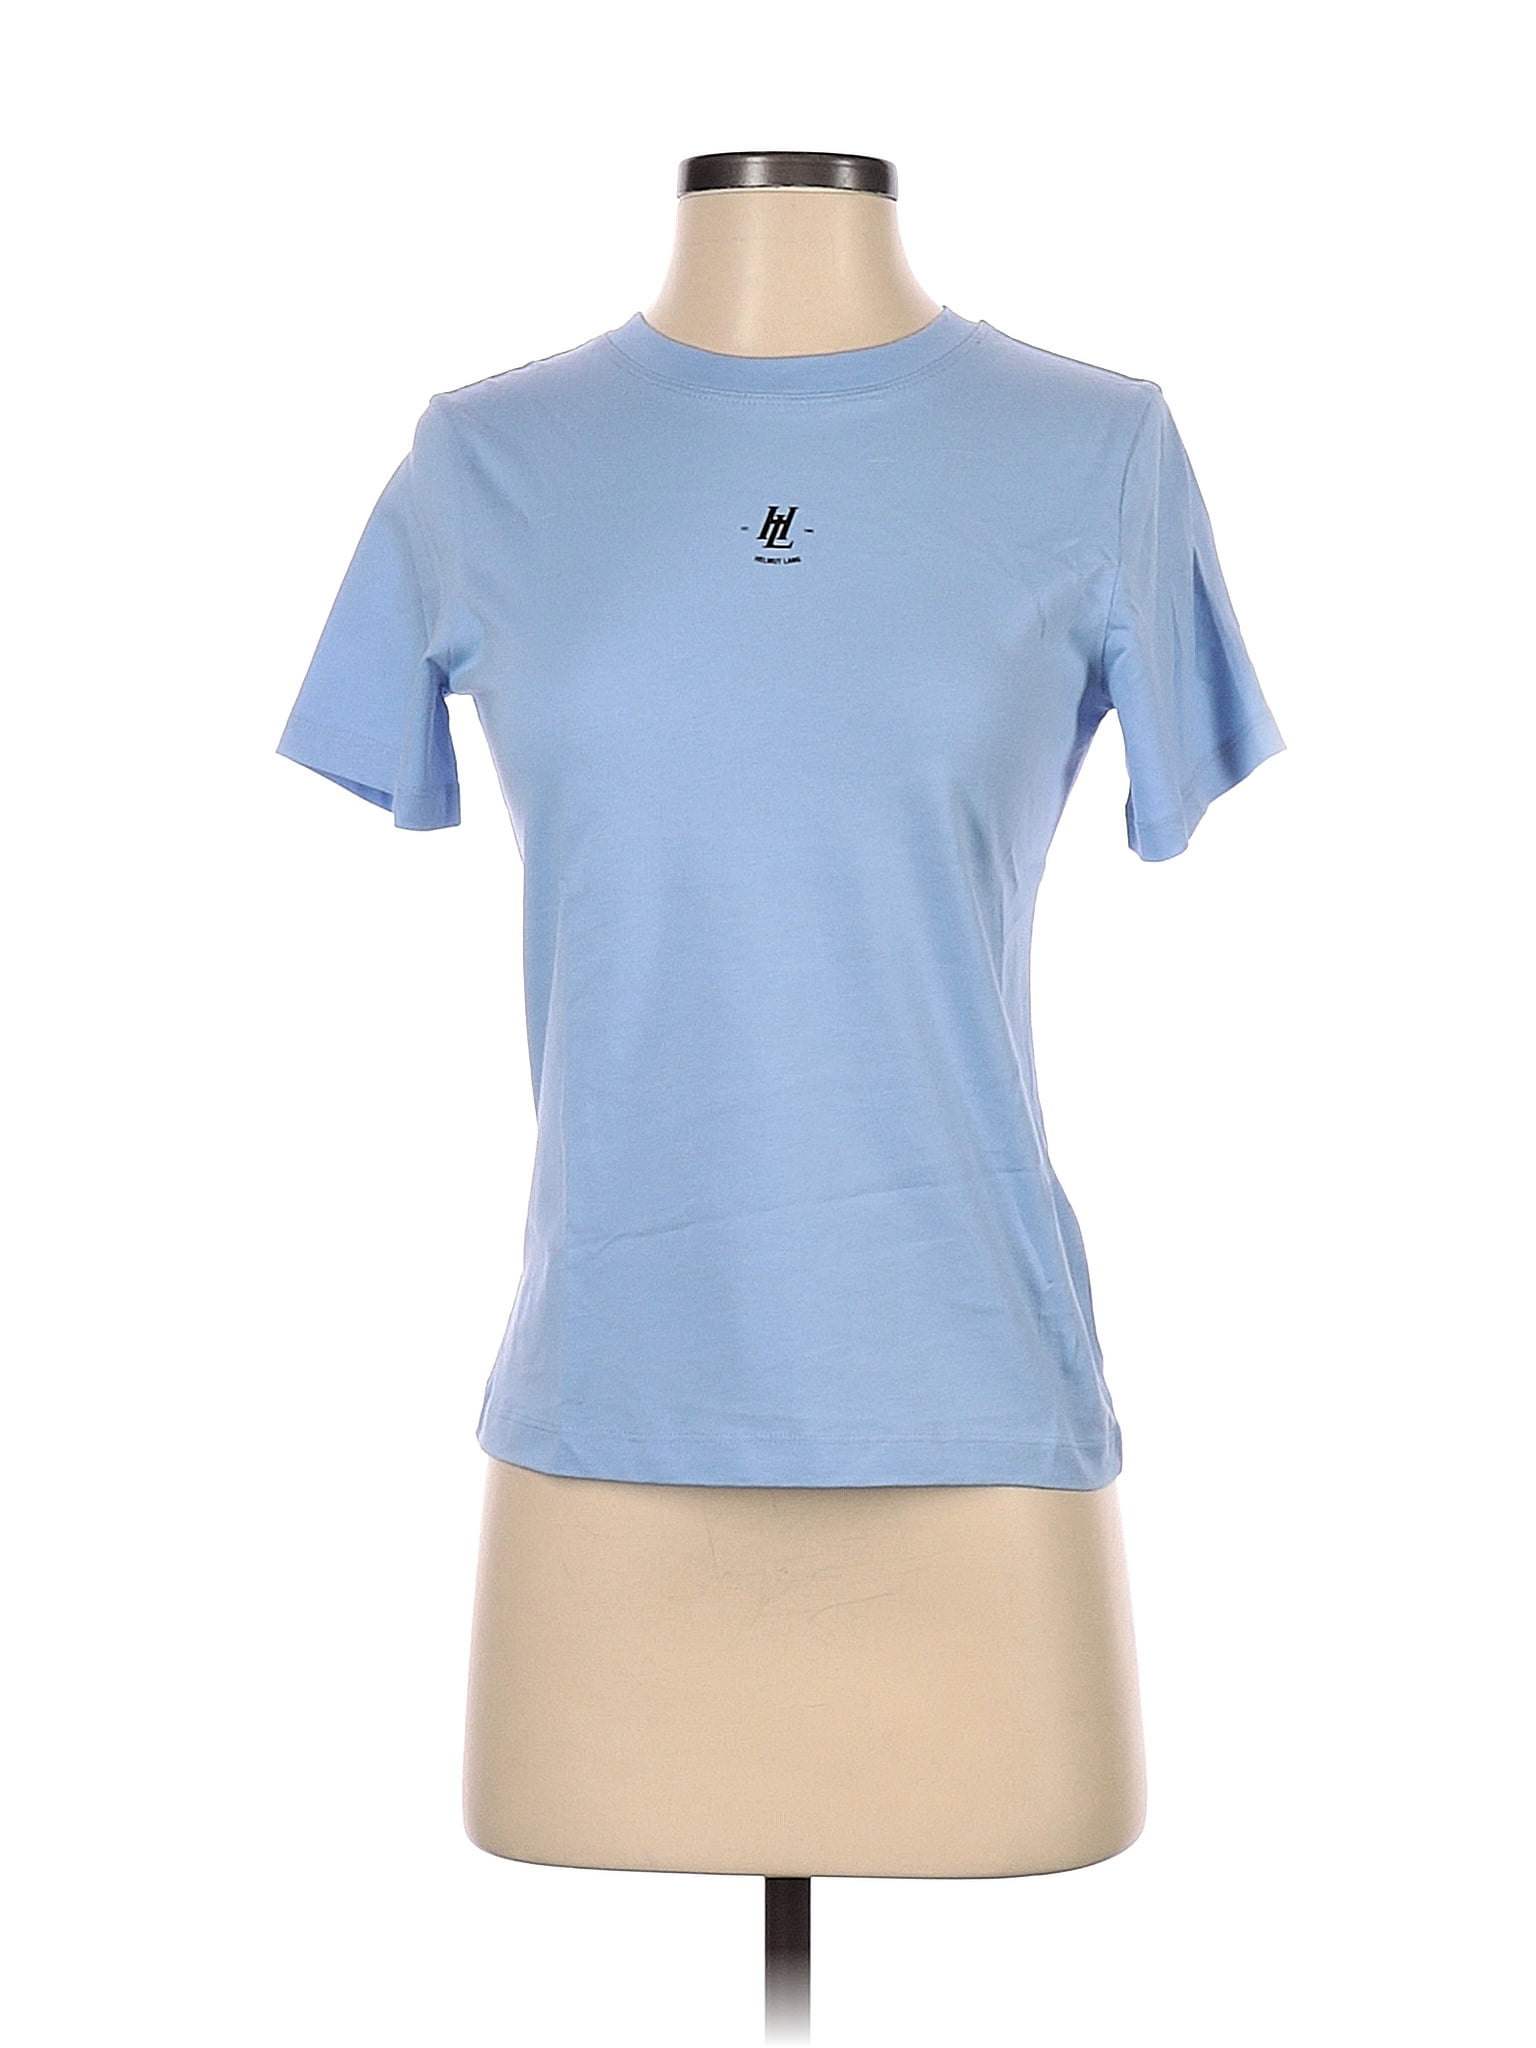 Helmut Lang 100% Solid Blue Short Sleeve T-Shirt Size XS - 71% off | thredUP